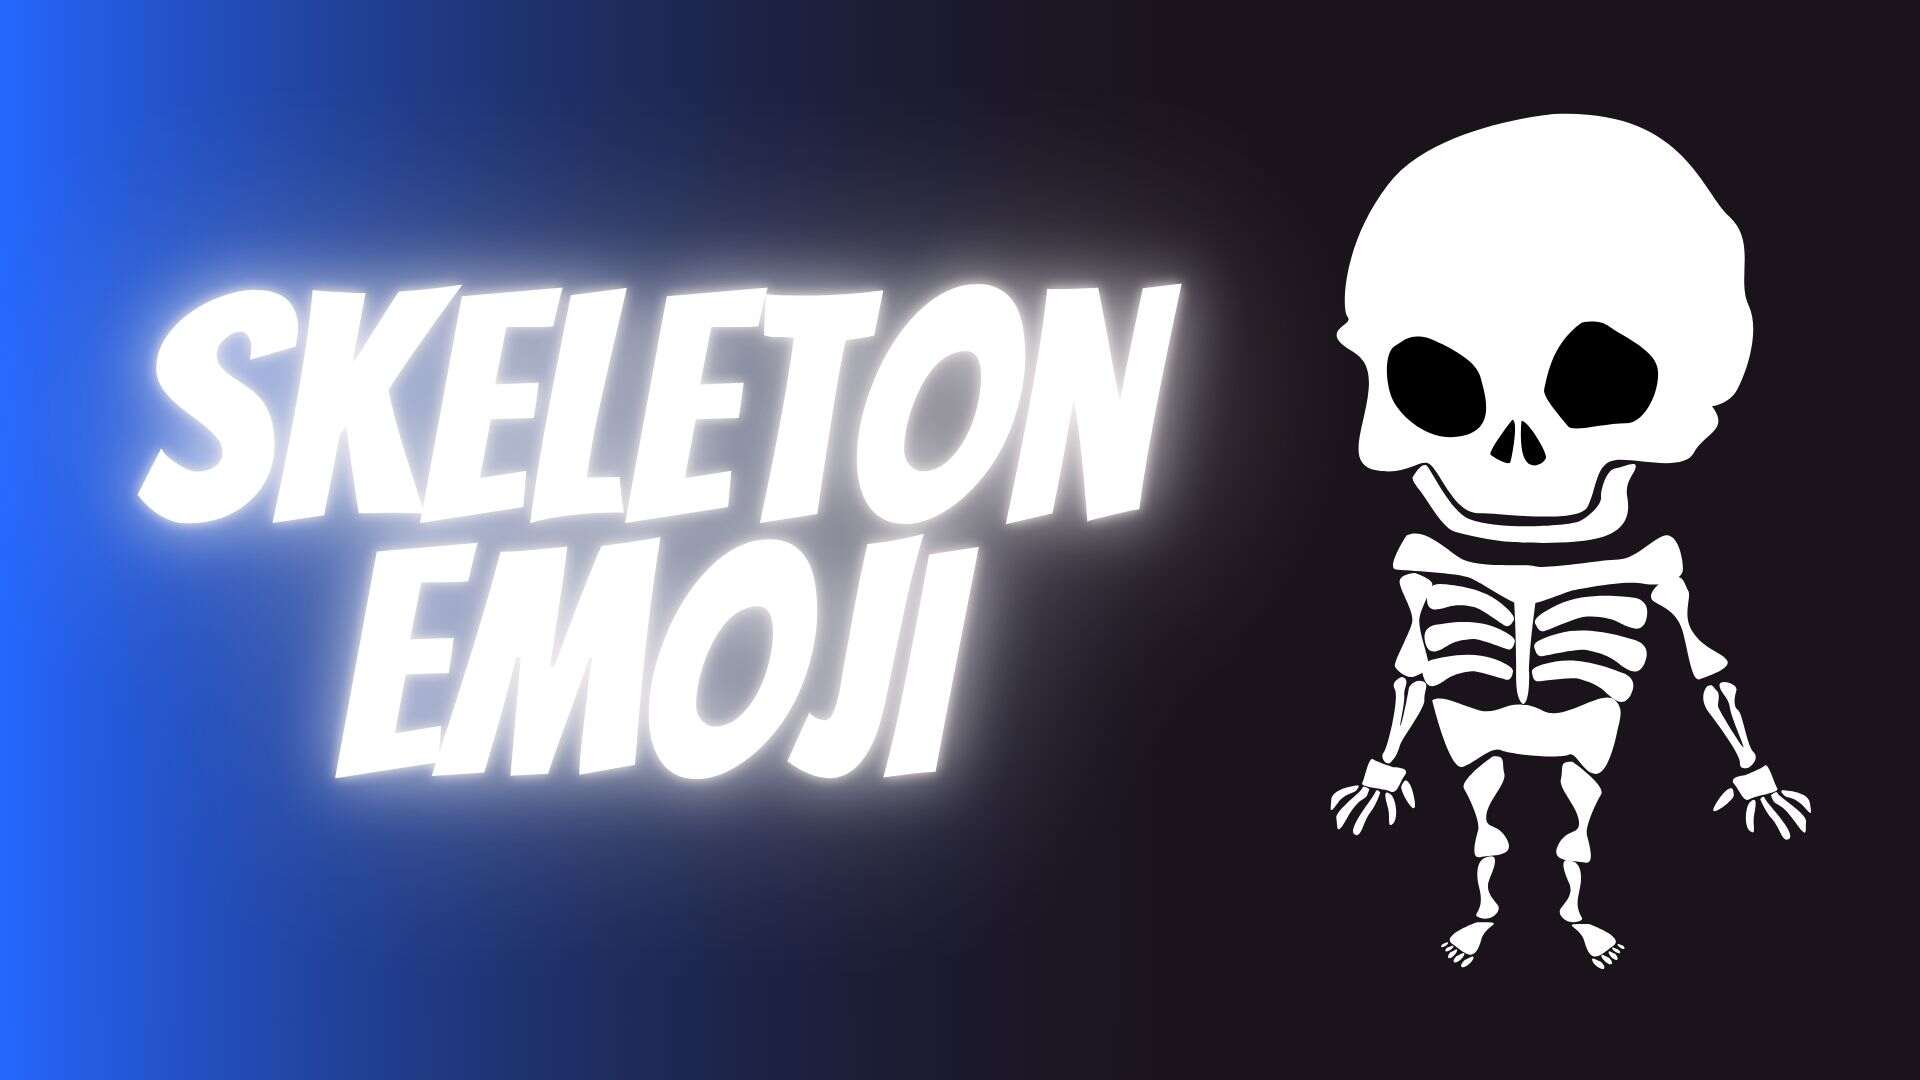 Skeleton emoji